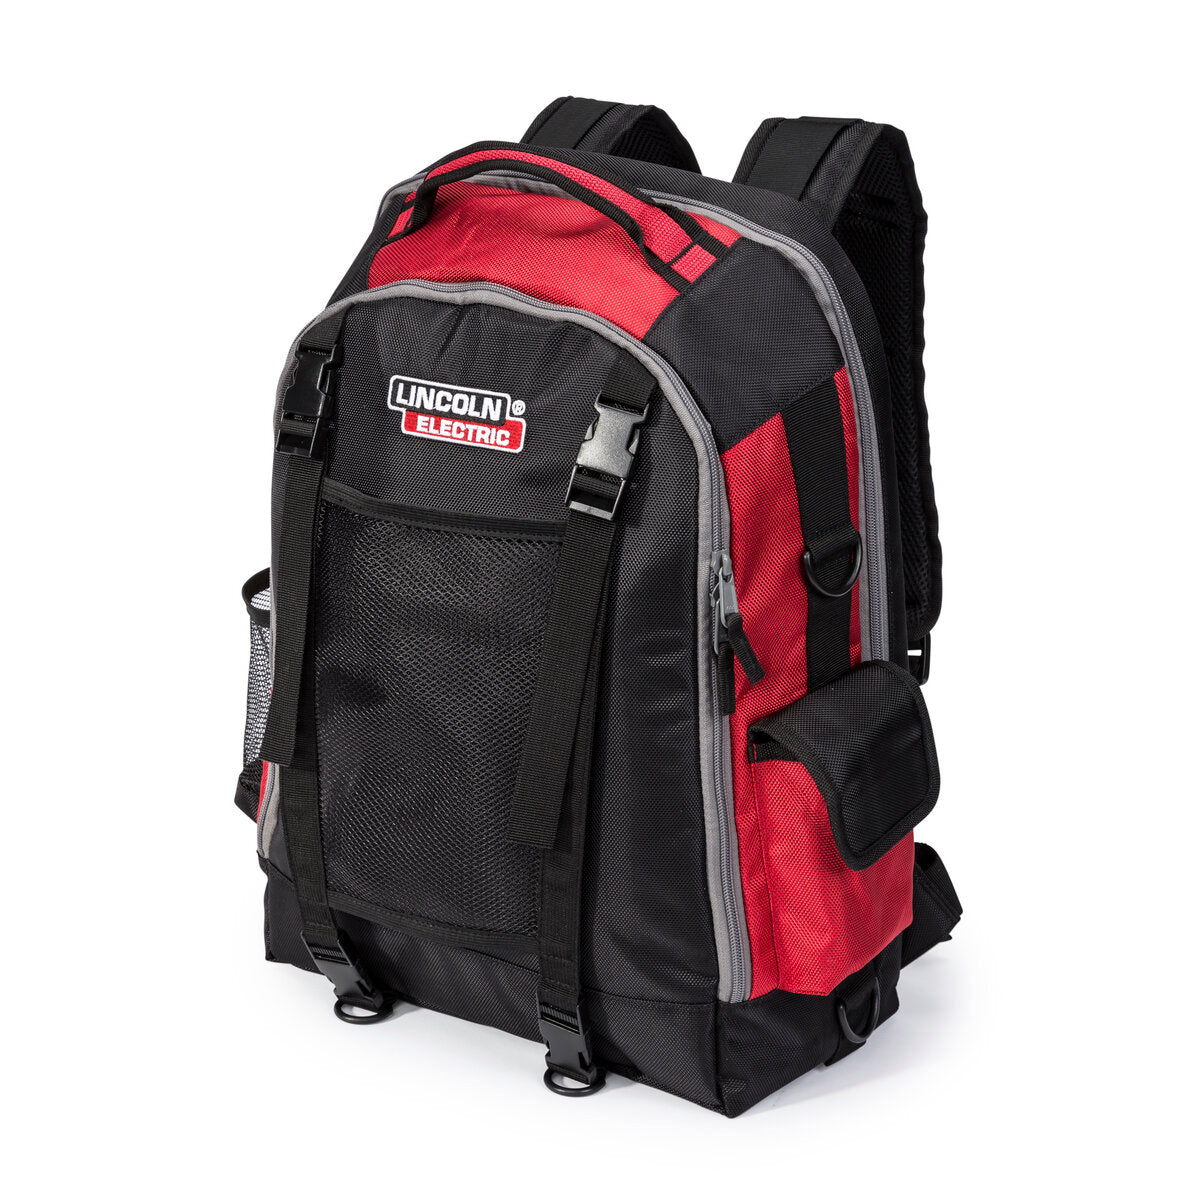 Welders All-In-One Backpack